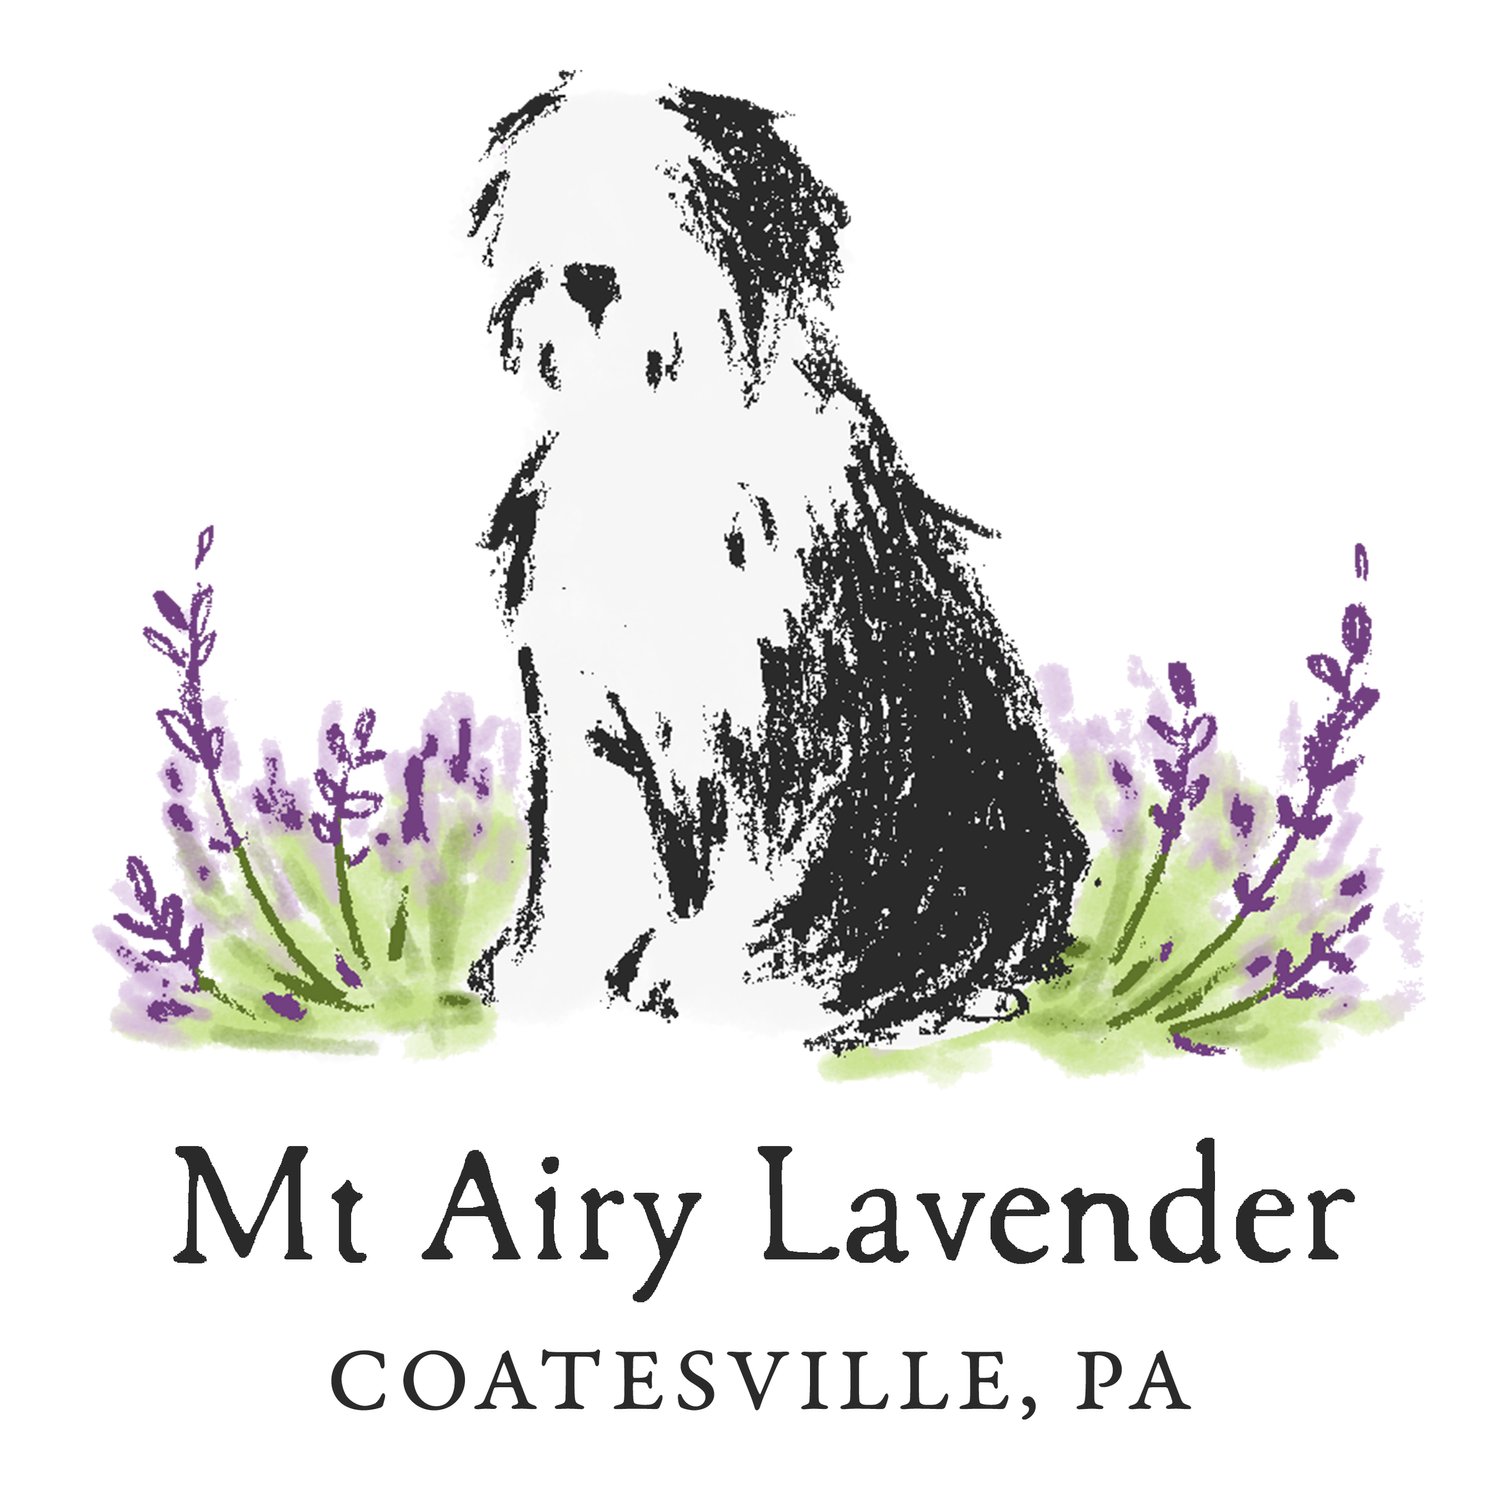 Mt Airy Lavender